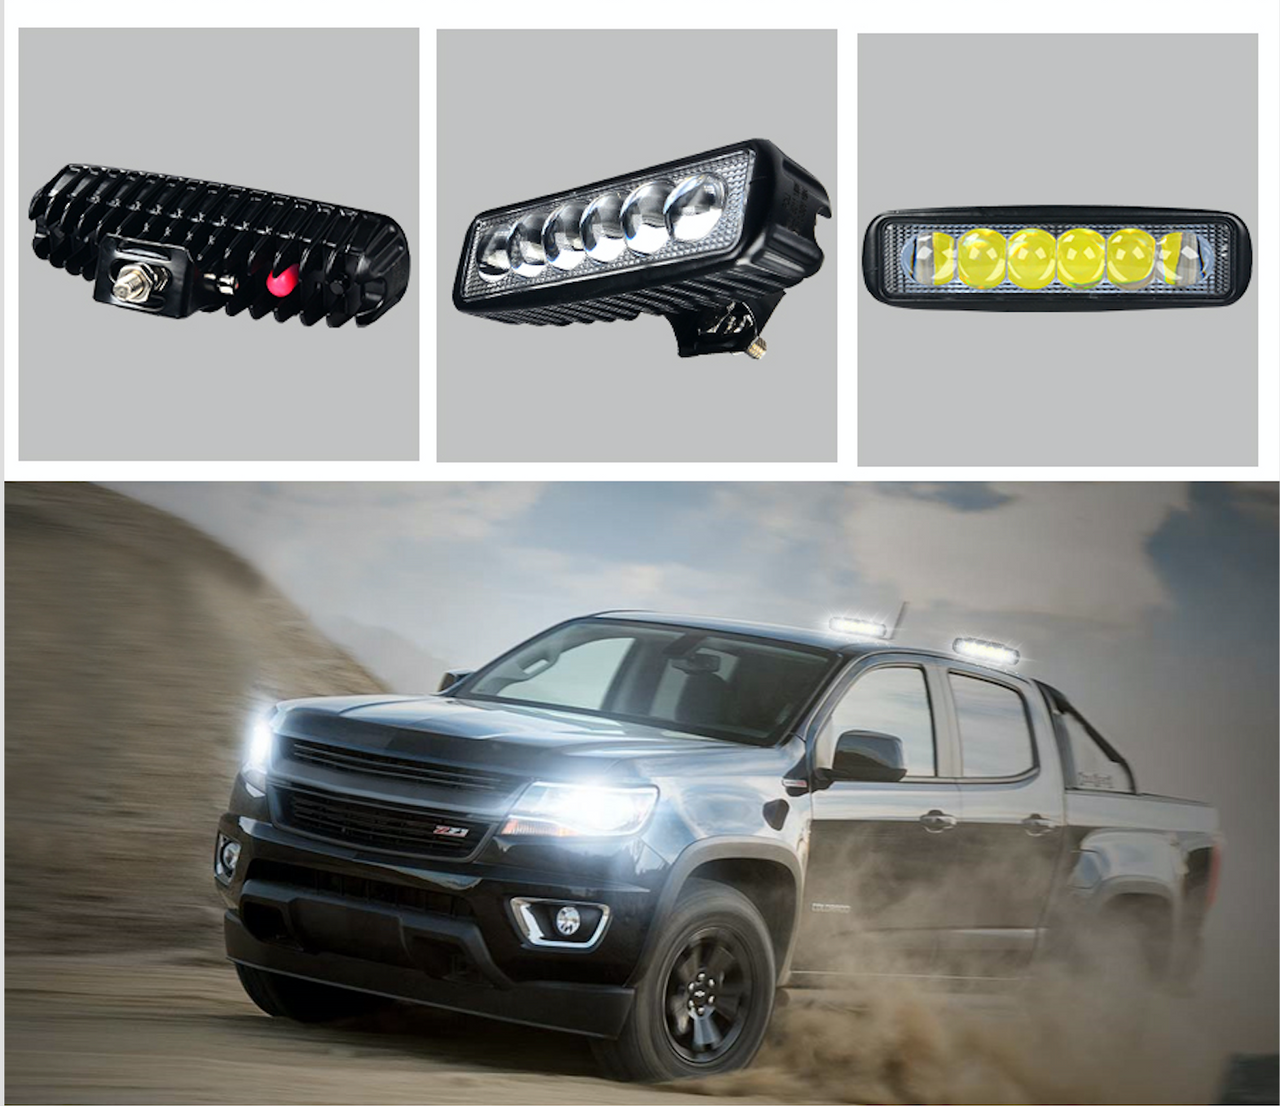 1pc LED Headlights 18W12V16LED Work Light Bar Flood Spot Lights Driving  Waterproof Lamp Offroad Car Truck